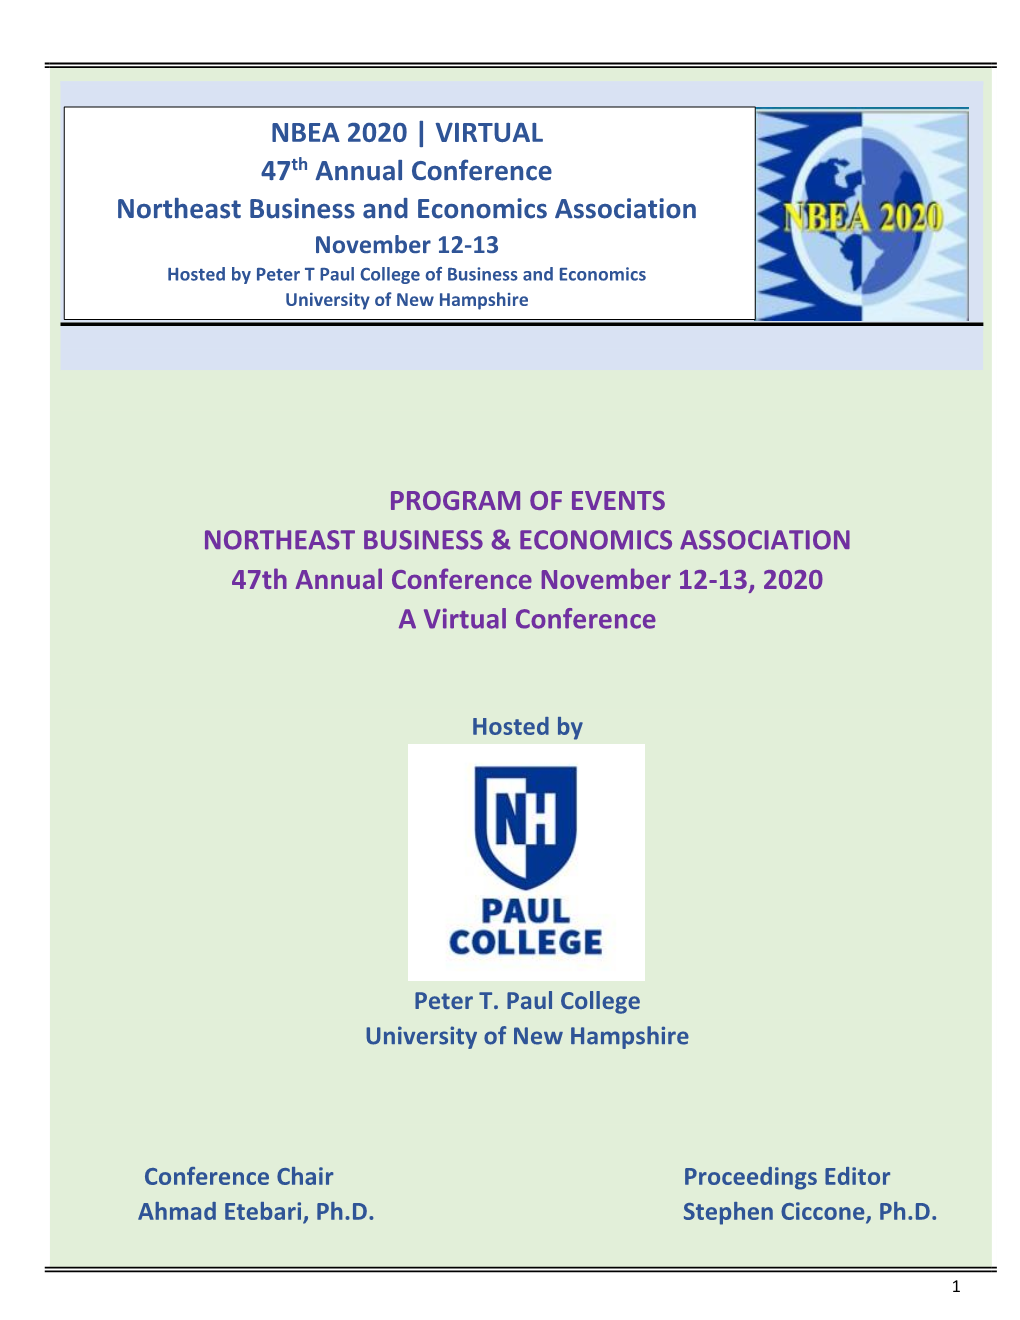 Program of Events Northeast Business & Economics